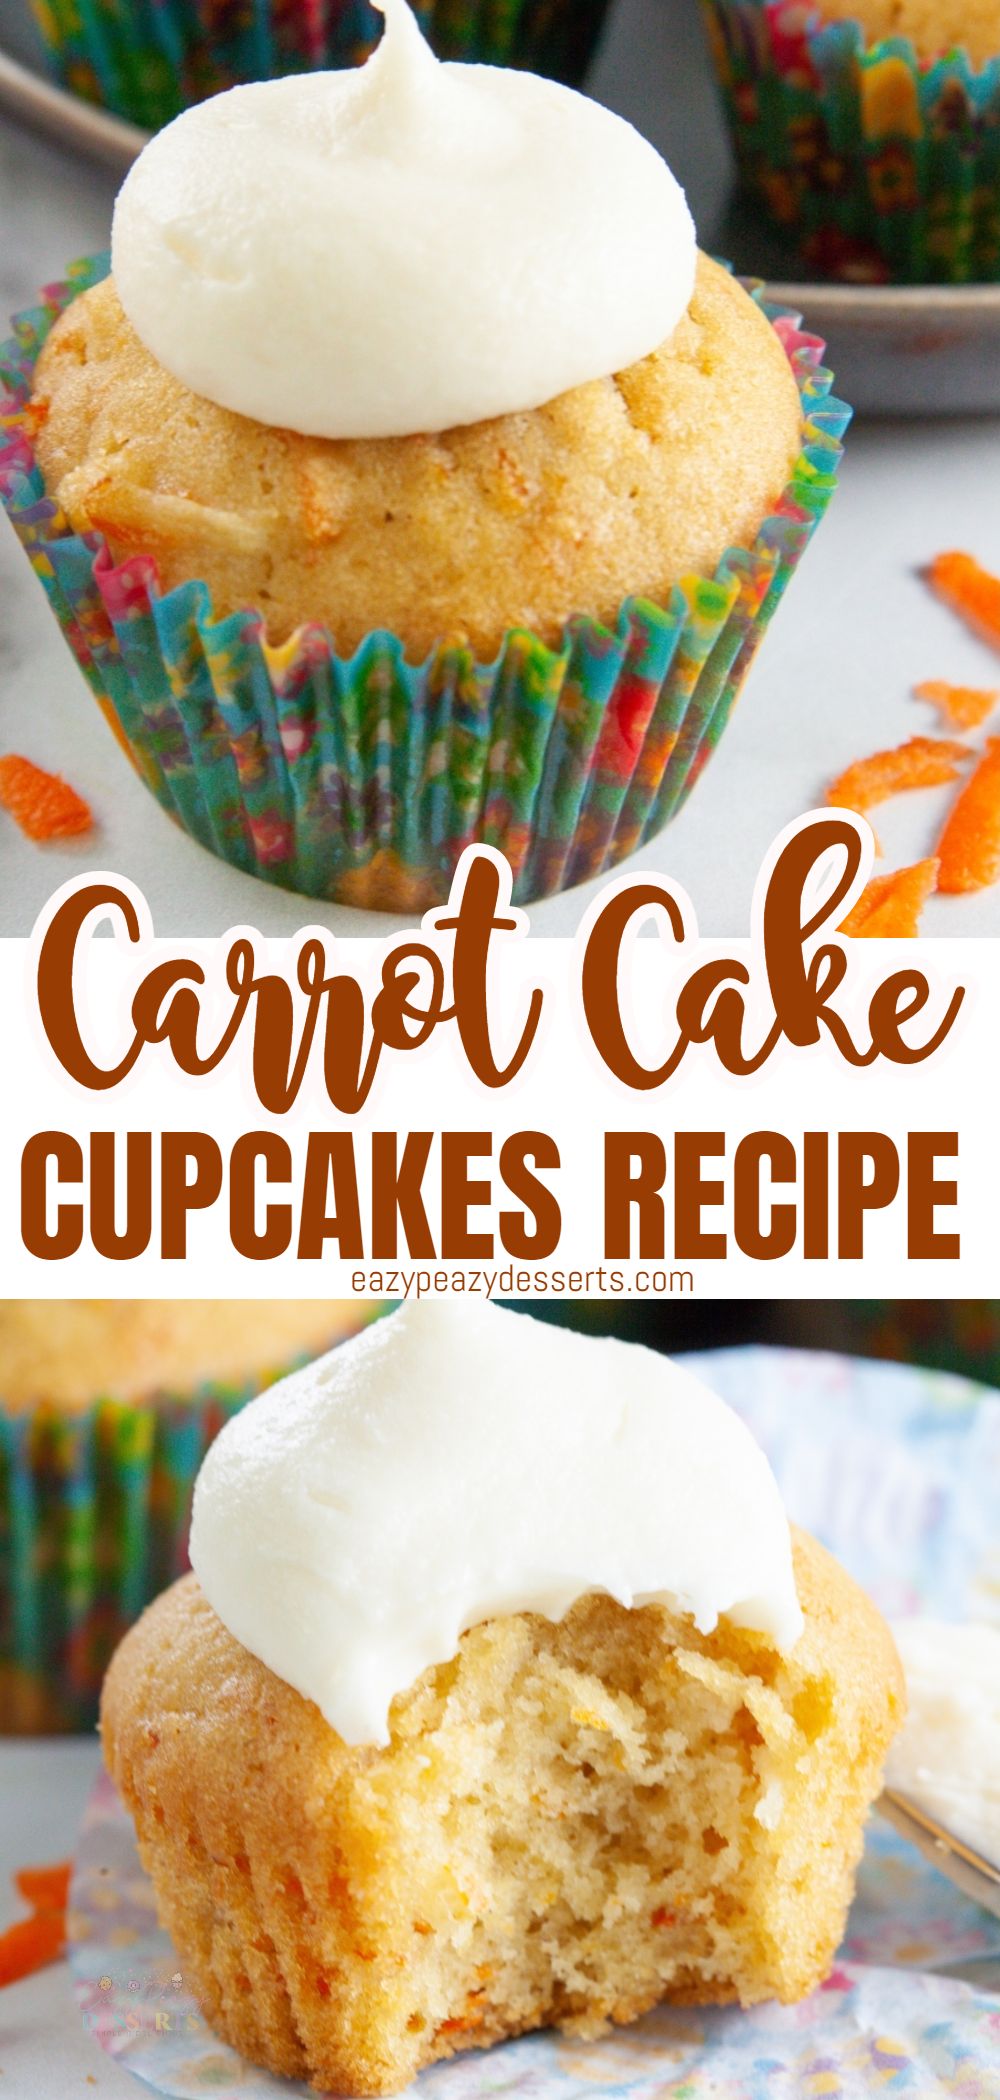 Carrot cake cupcakes